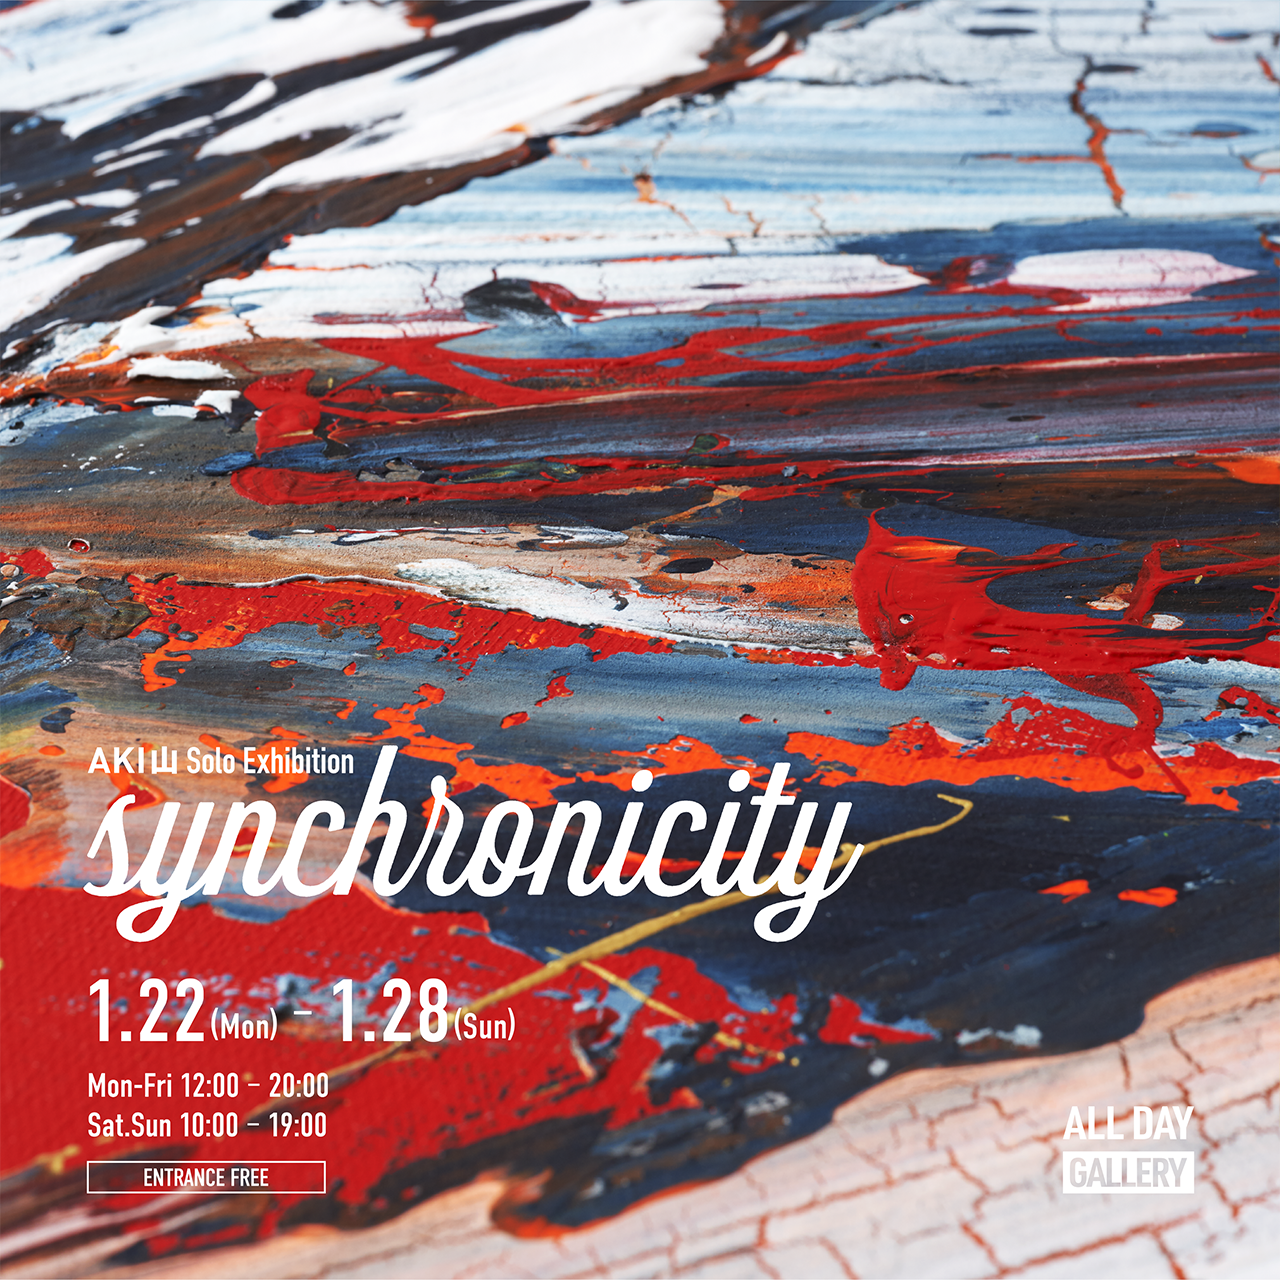 AKI山 Solo Exhibition “synchronicity”